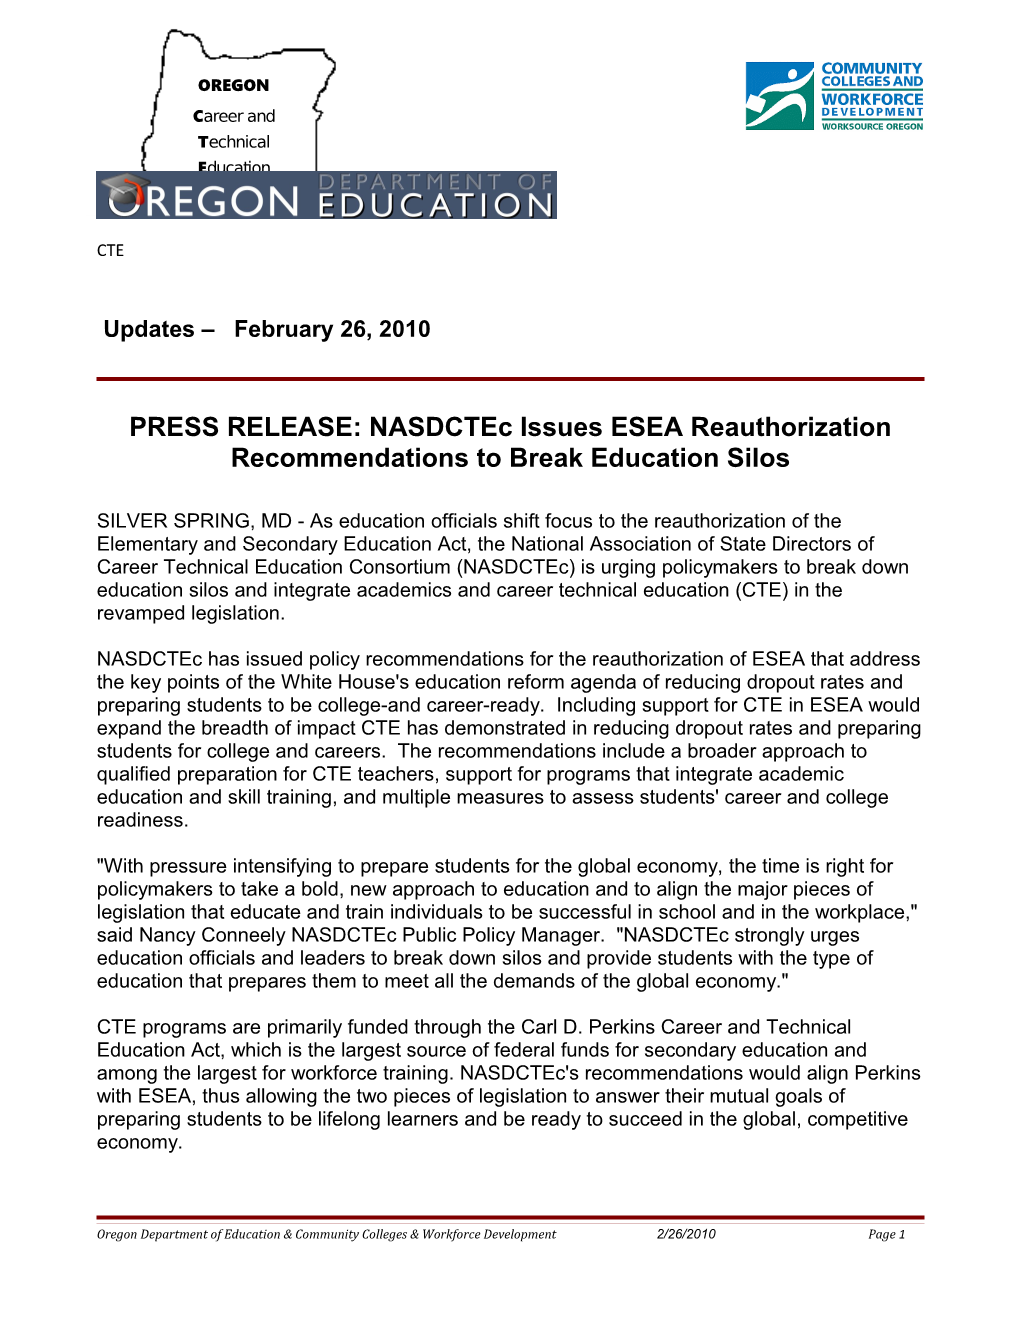 PRESS RELEASE: Nasdctec Issues ESEA Reauthorization Recommendations to Break Education Silos